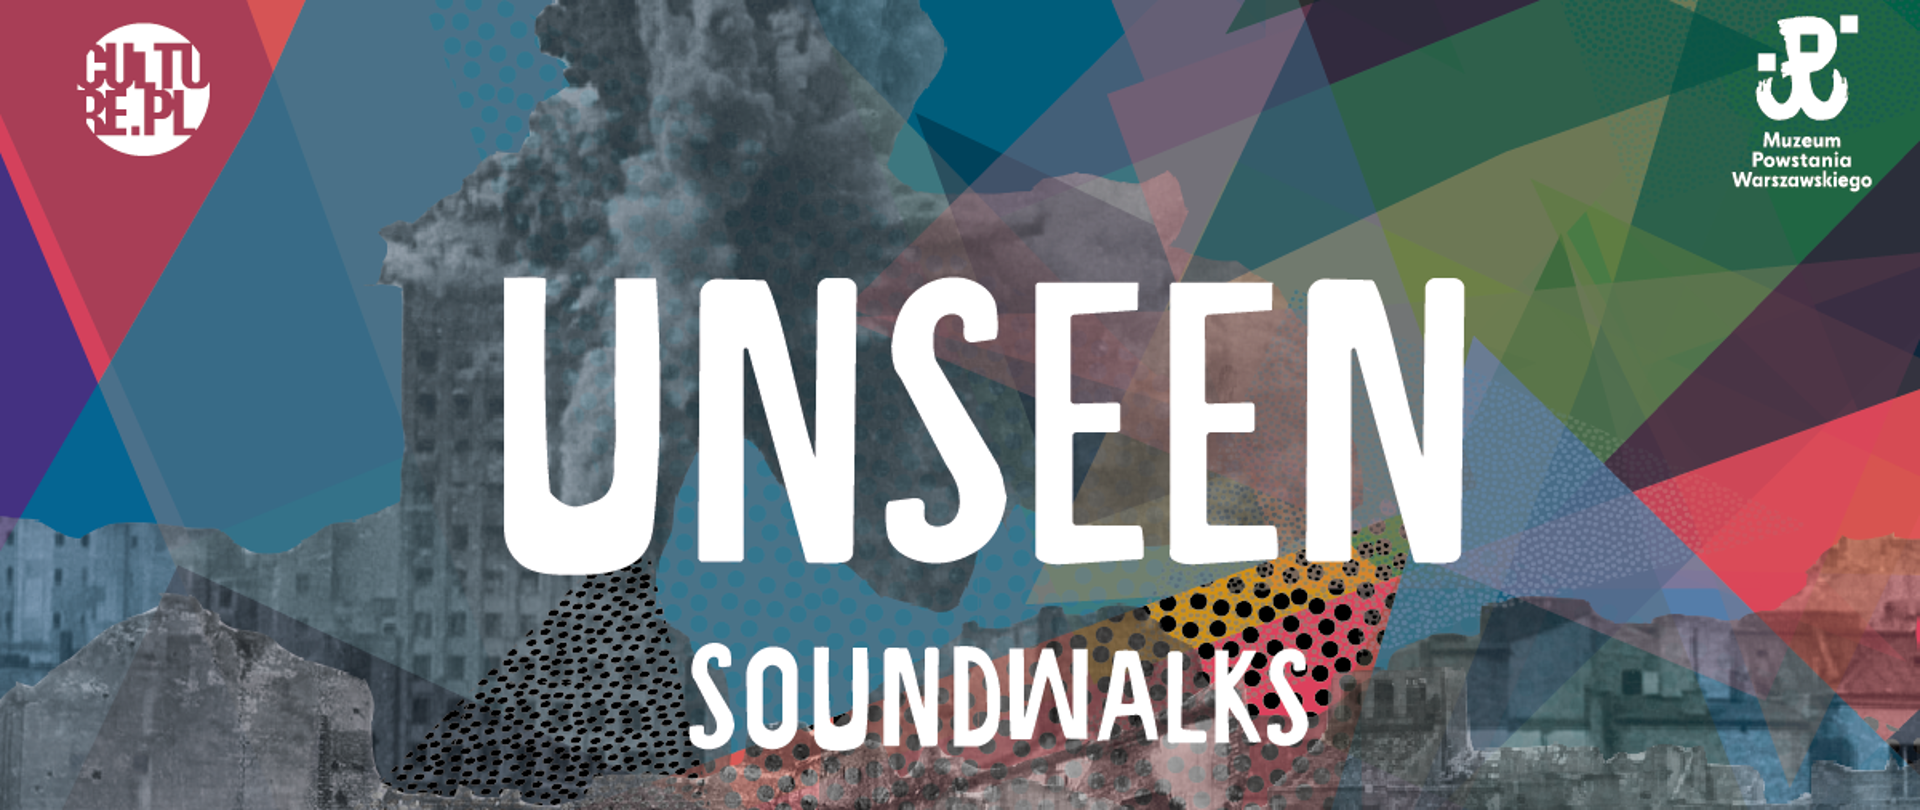 Unseen Soundwalks: Powstanie Warszawskie ’44